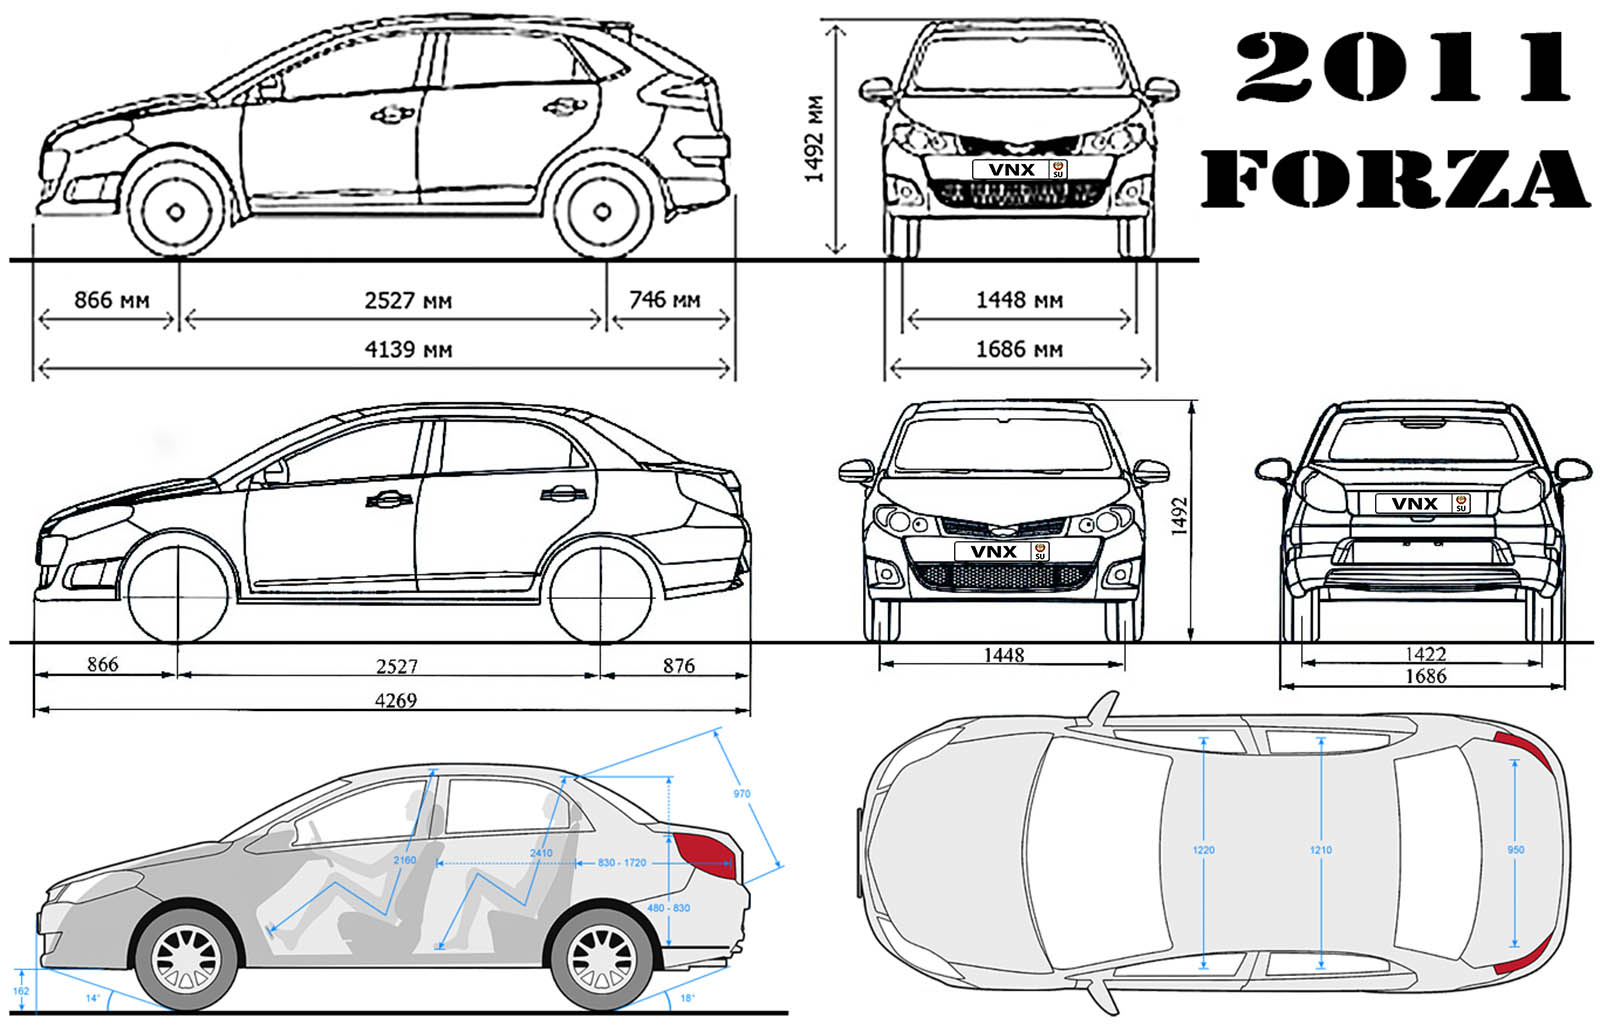 Габаритные размеры ЗАЗ Форца (dimensions ZAZ Forza)